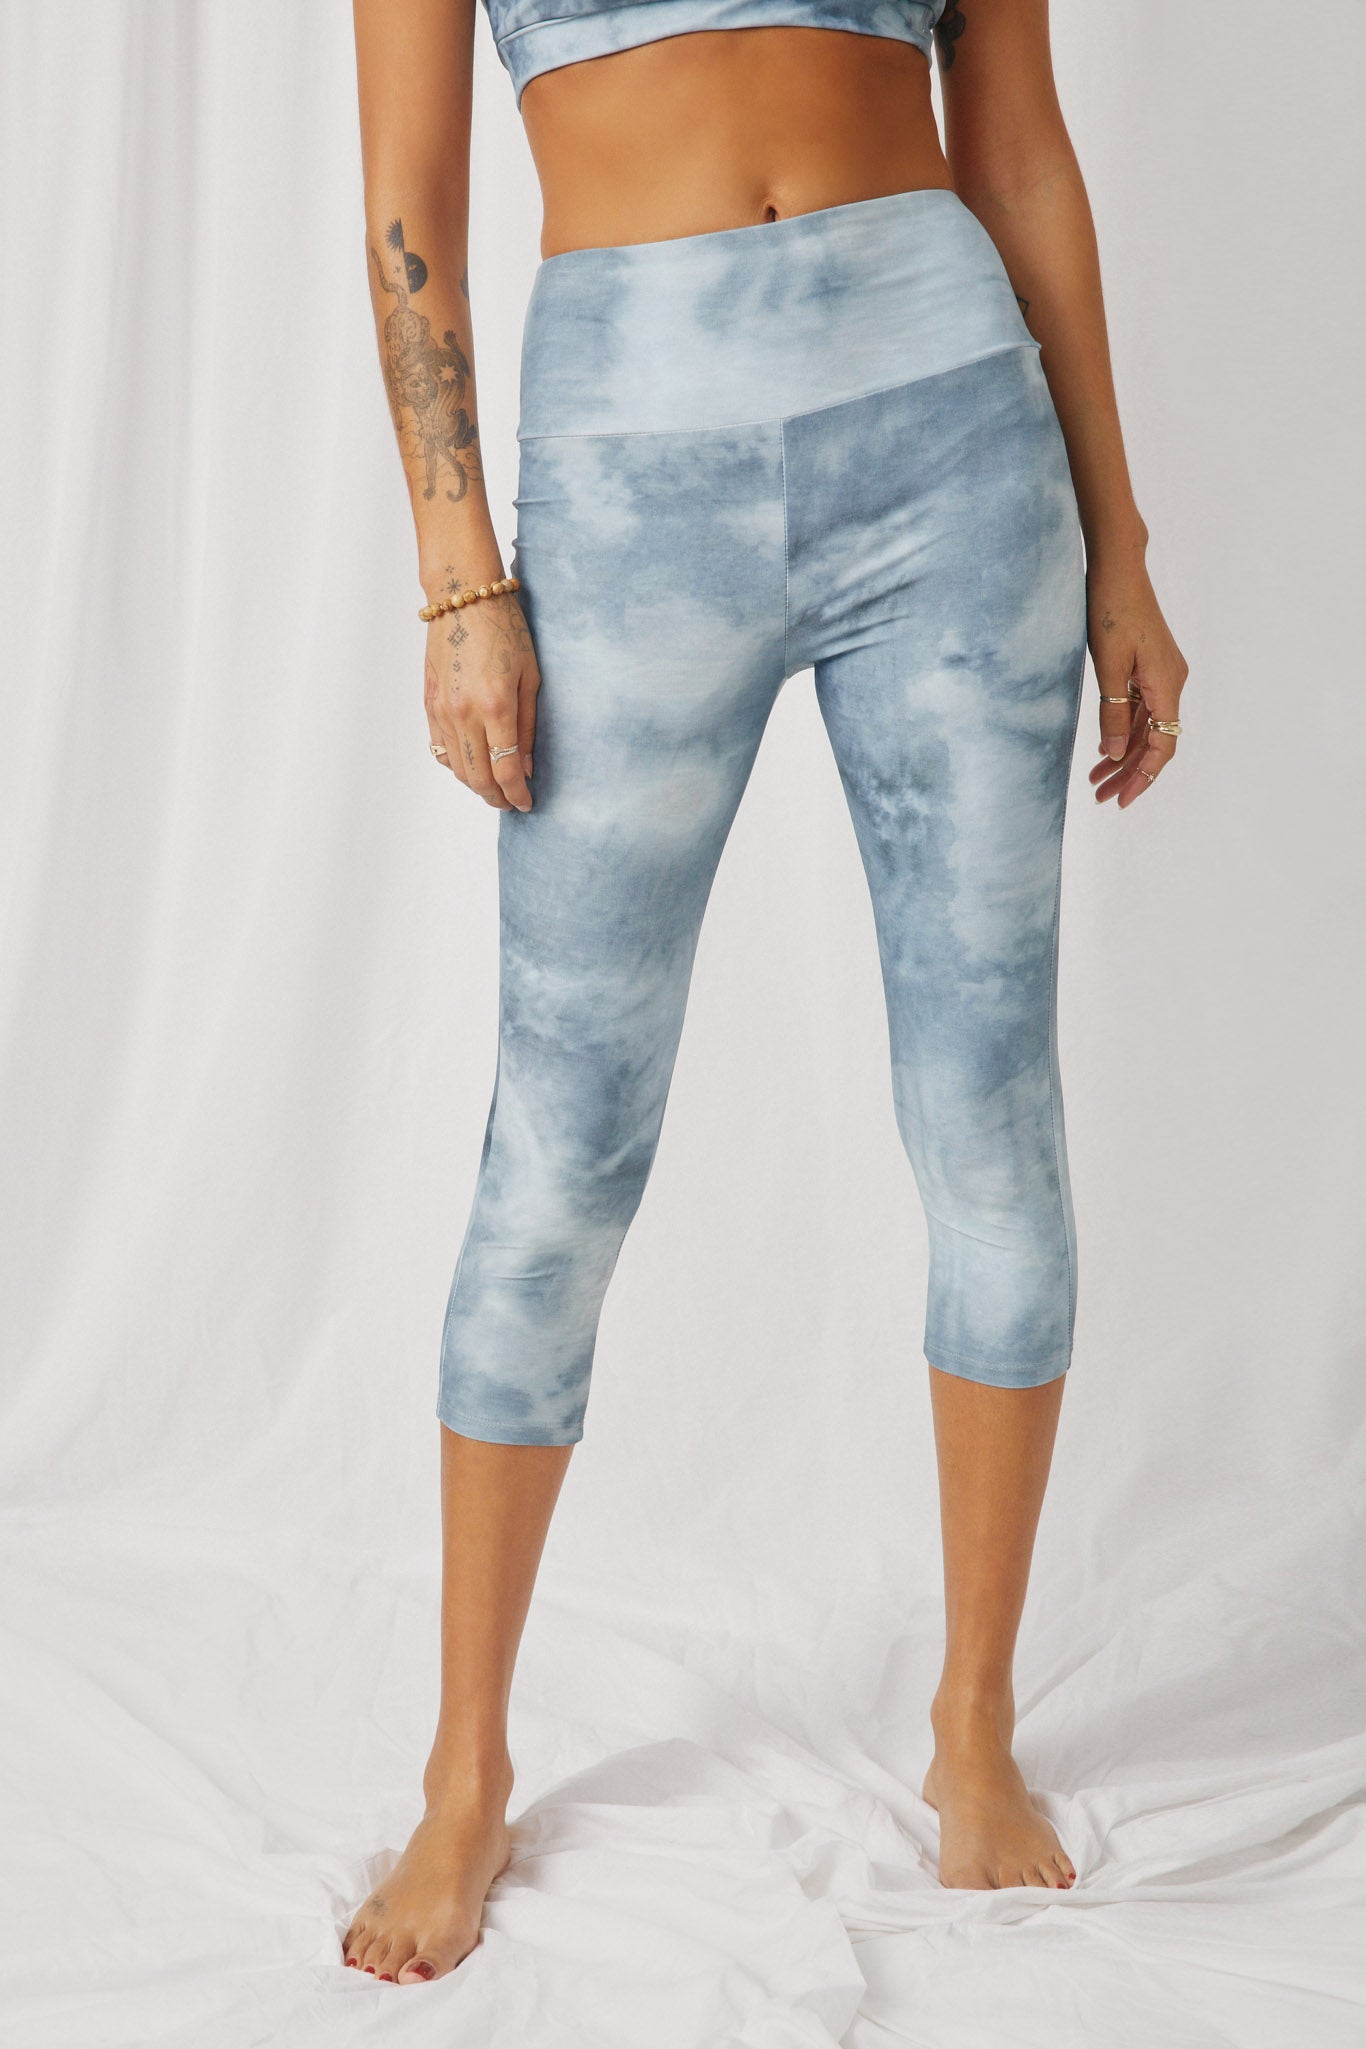 HY2912 Grey Womens Tie Dye Print Active Leggings Front